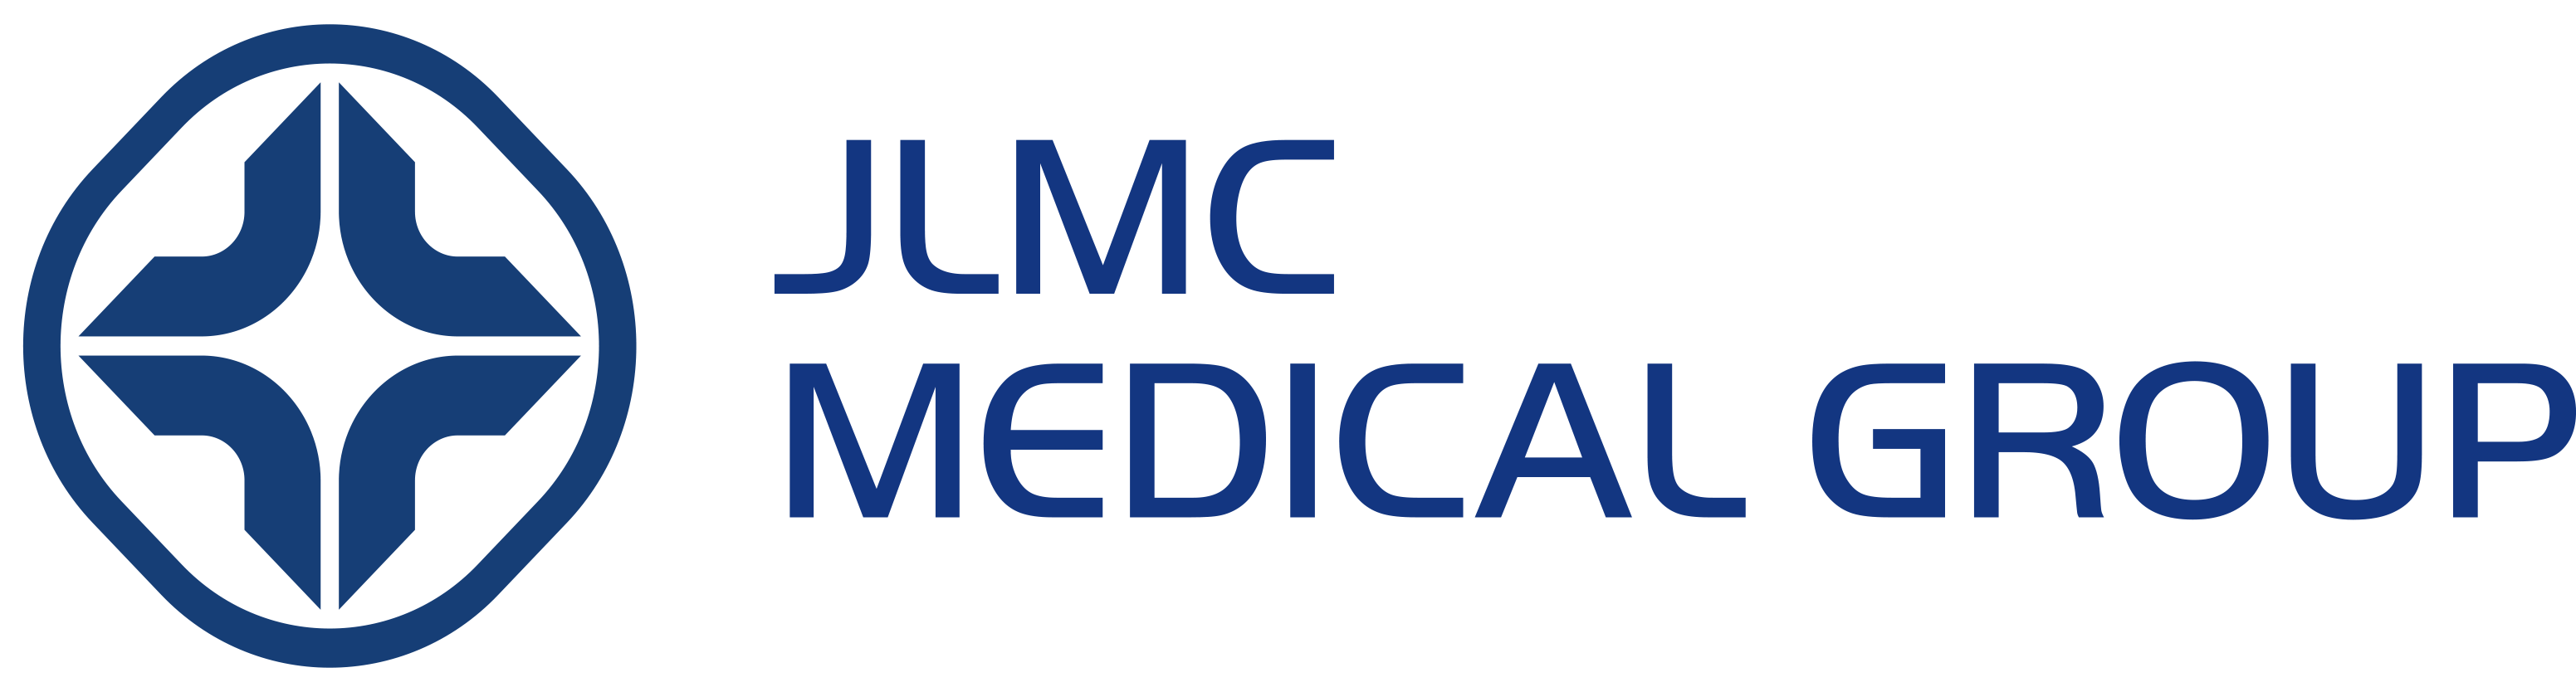 JLMC Medical Group